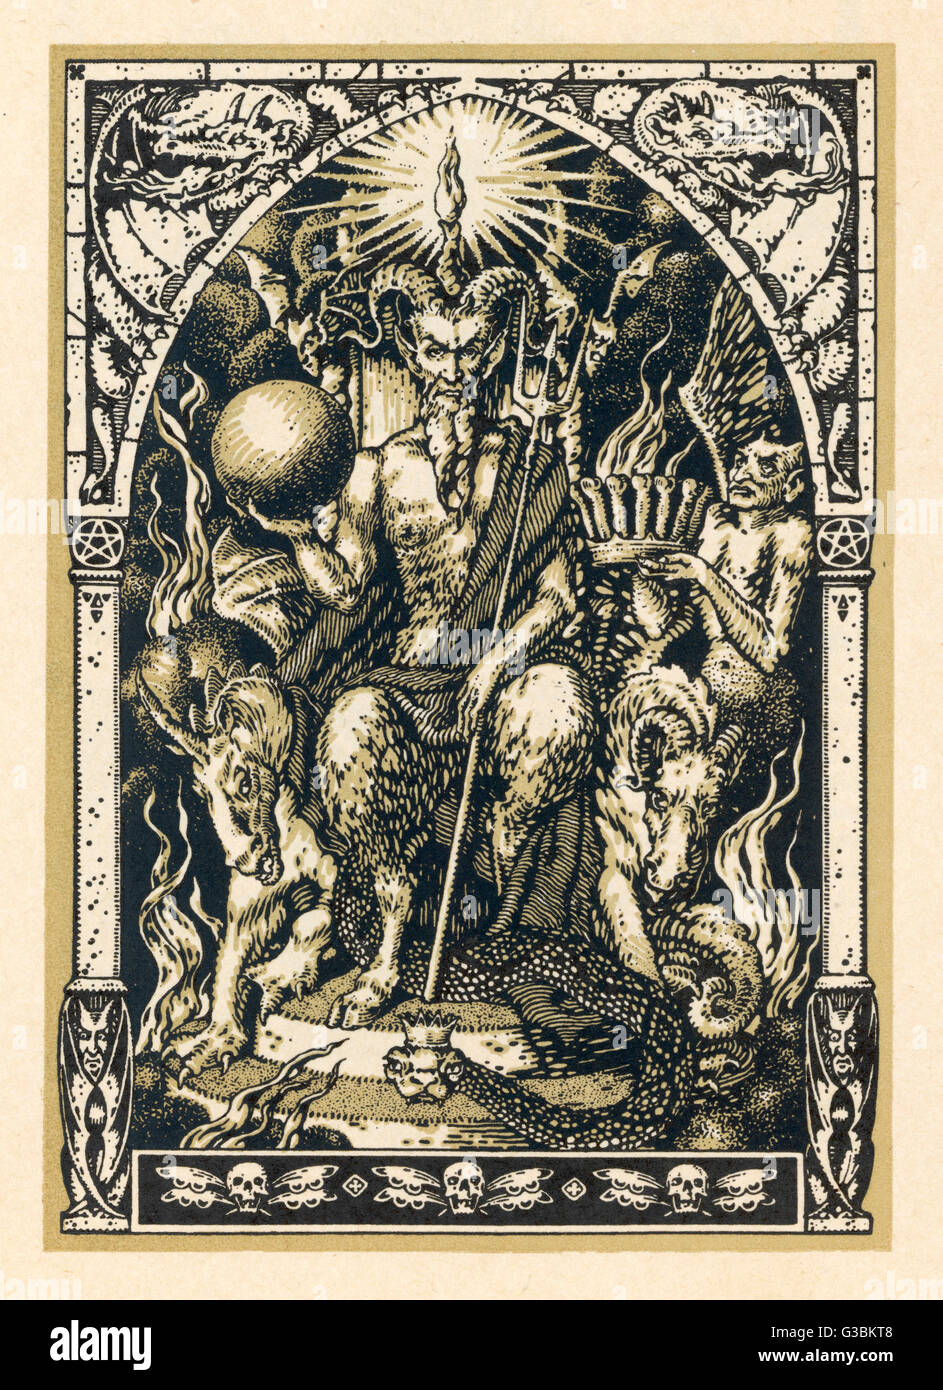 Satana presiede al Sabbat, frequentato da demoni in umano o forme animali. Data: circa 1560 Foto Stock